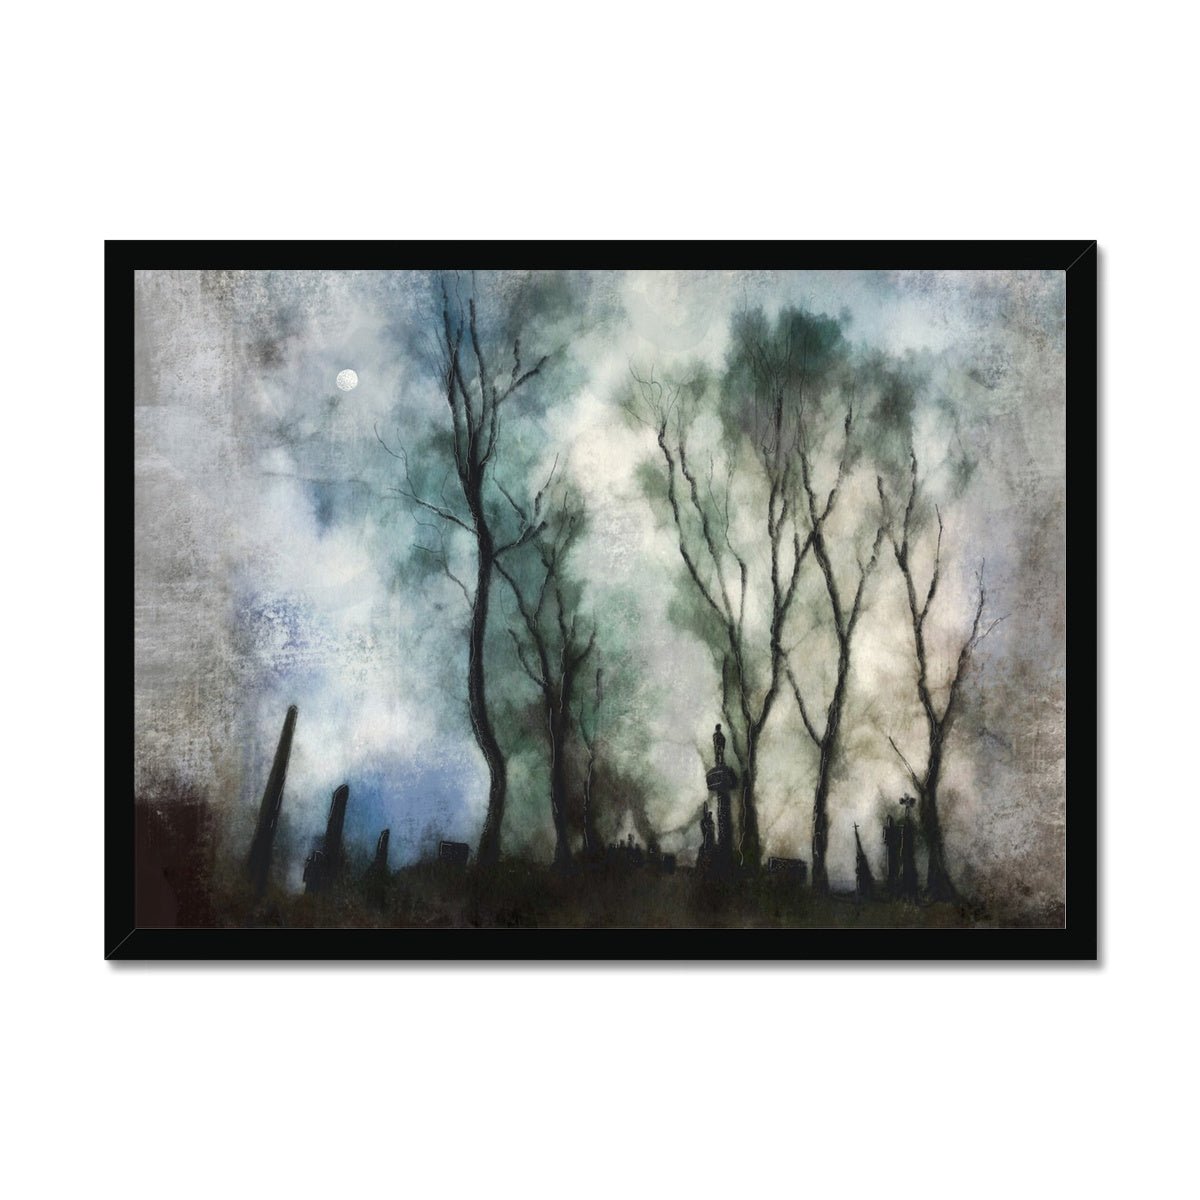 Glasgow Necropolis Moonlight Painting | Framed Prints From Scotland-Framed Prints-Edinburgh & Glasgow Art Gallery-A2 Landscape-Black Frame-Paintings, Prints, Homeware, Art Gifts From Scotland By Scottish Artist Kevin Hunter